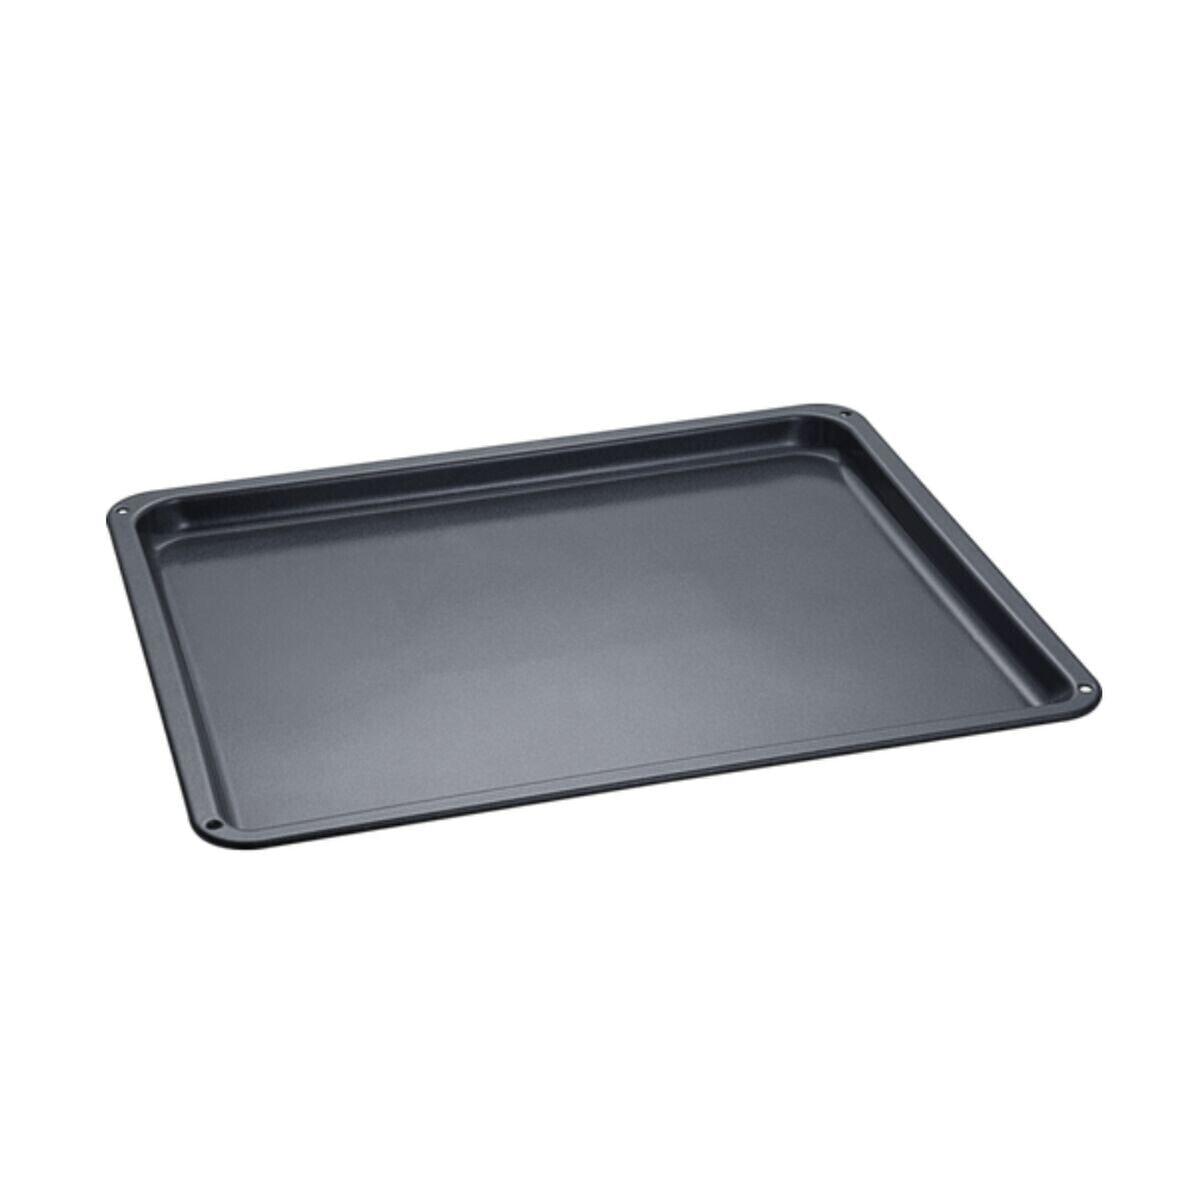 Baking tray AEG A9OOAF11 Black (1 Piece)